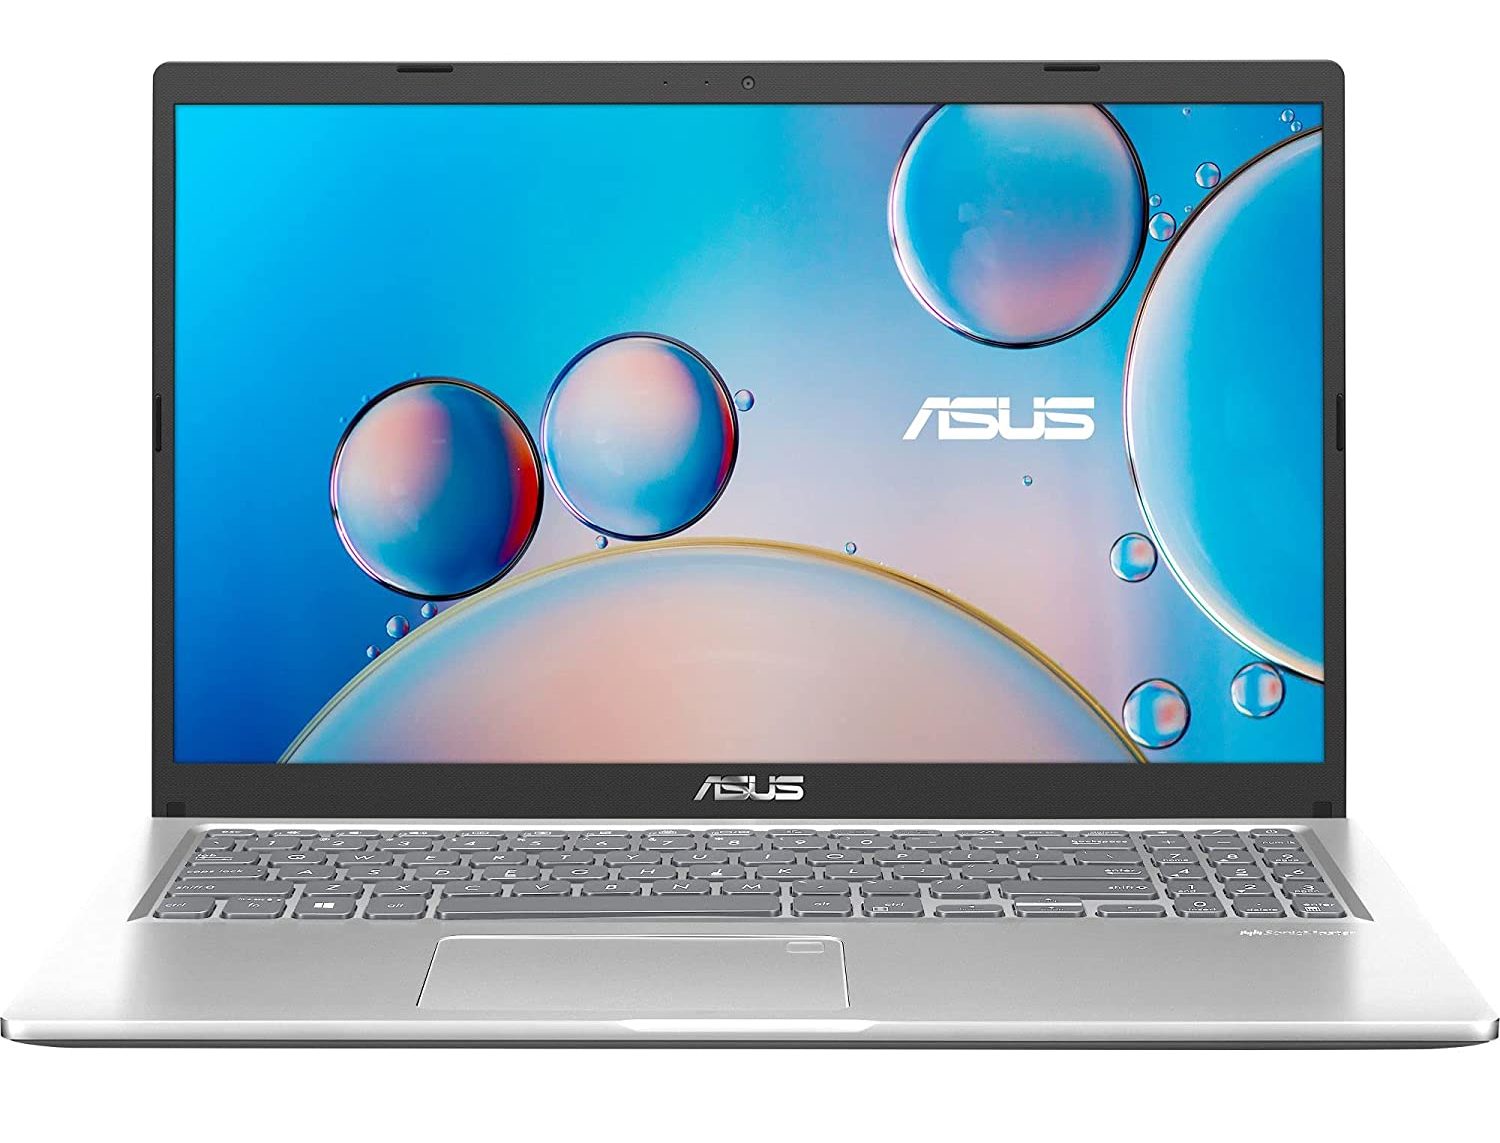 ASUS VivoBook 15 (2020), 39.6 cm HD, Dual Core Intel Celeron N4020, Thin and Light Laptop - The Dashing Man